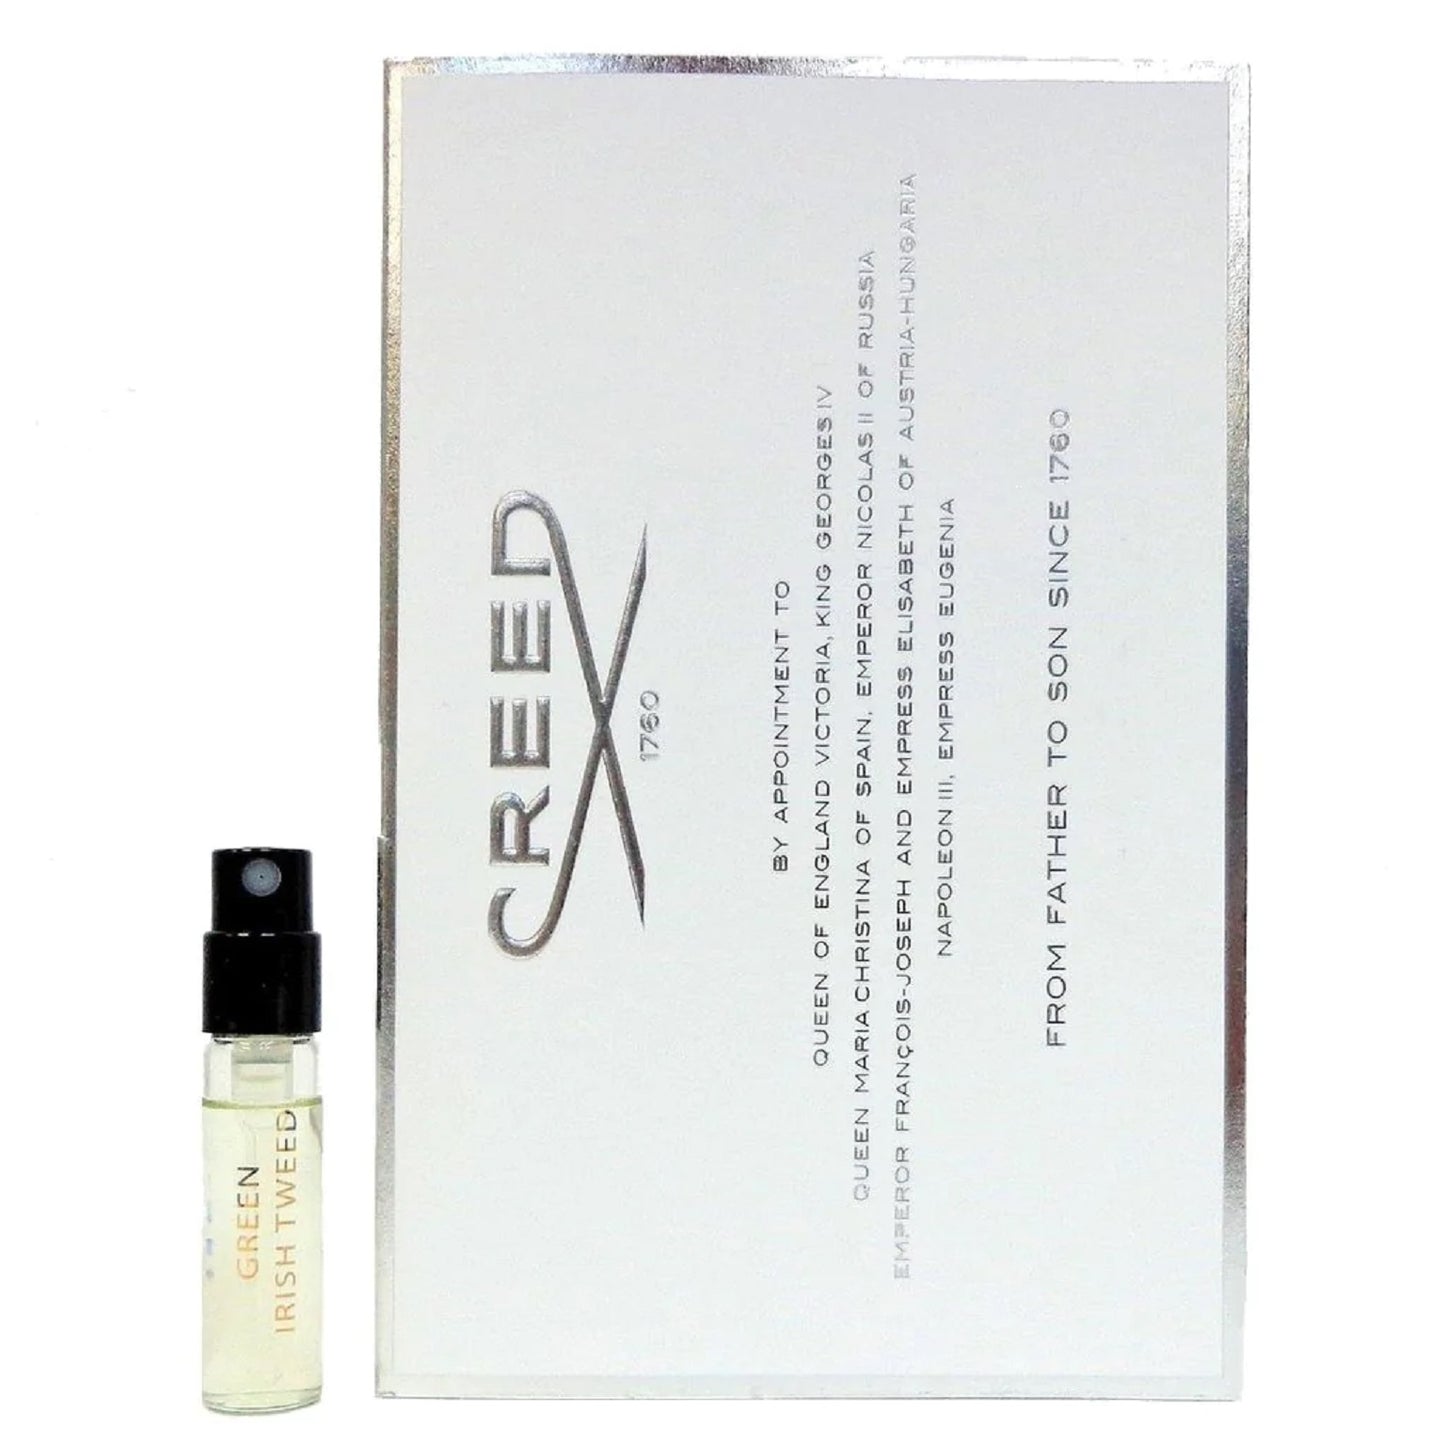 Creed Green Irish Tweed edp 2.5 ml probă oficială de parfum